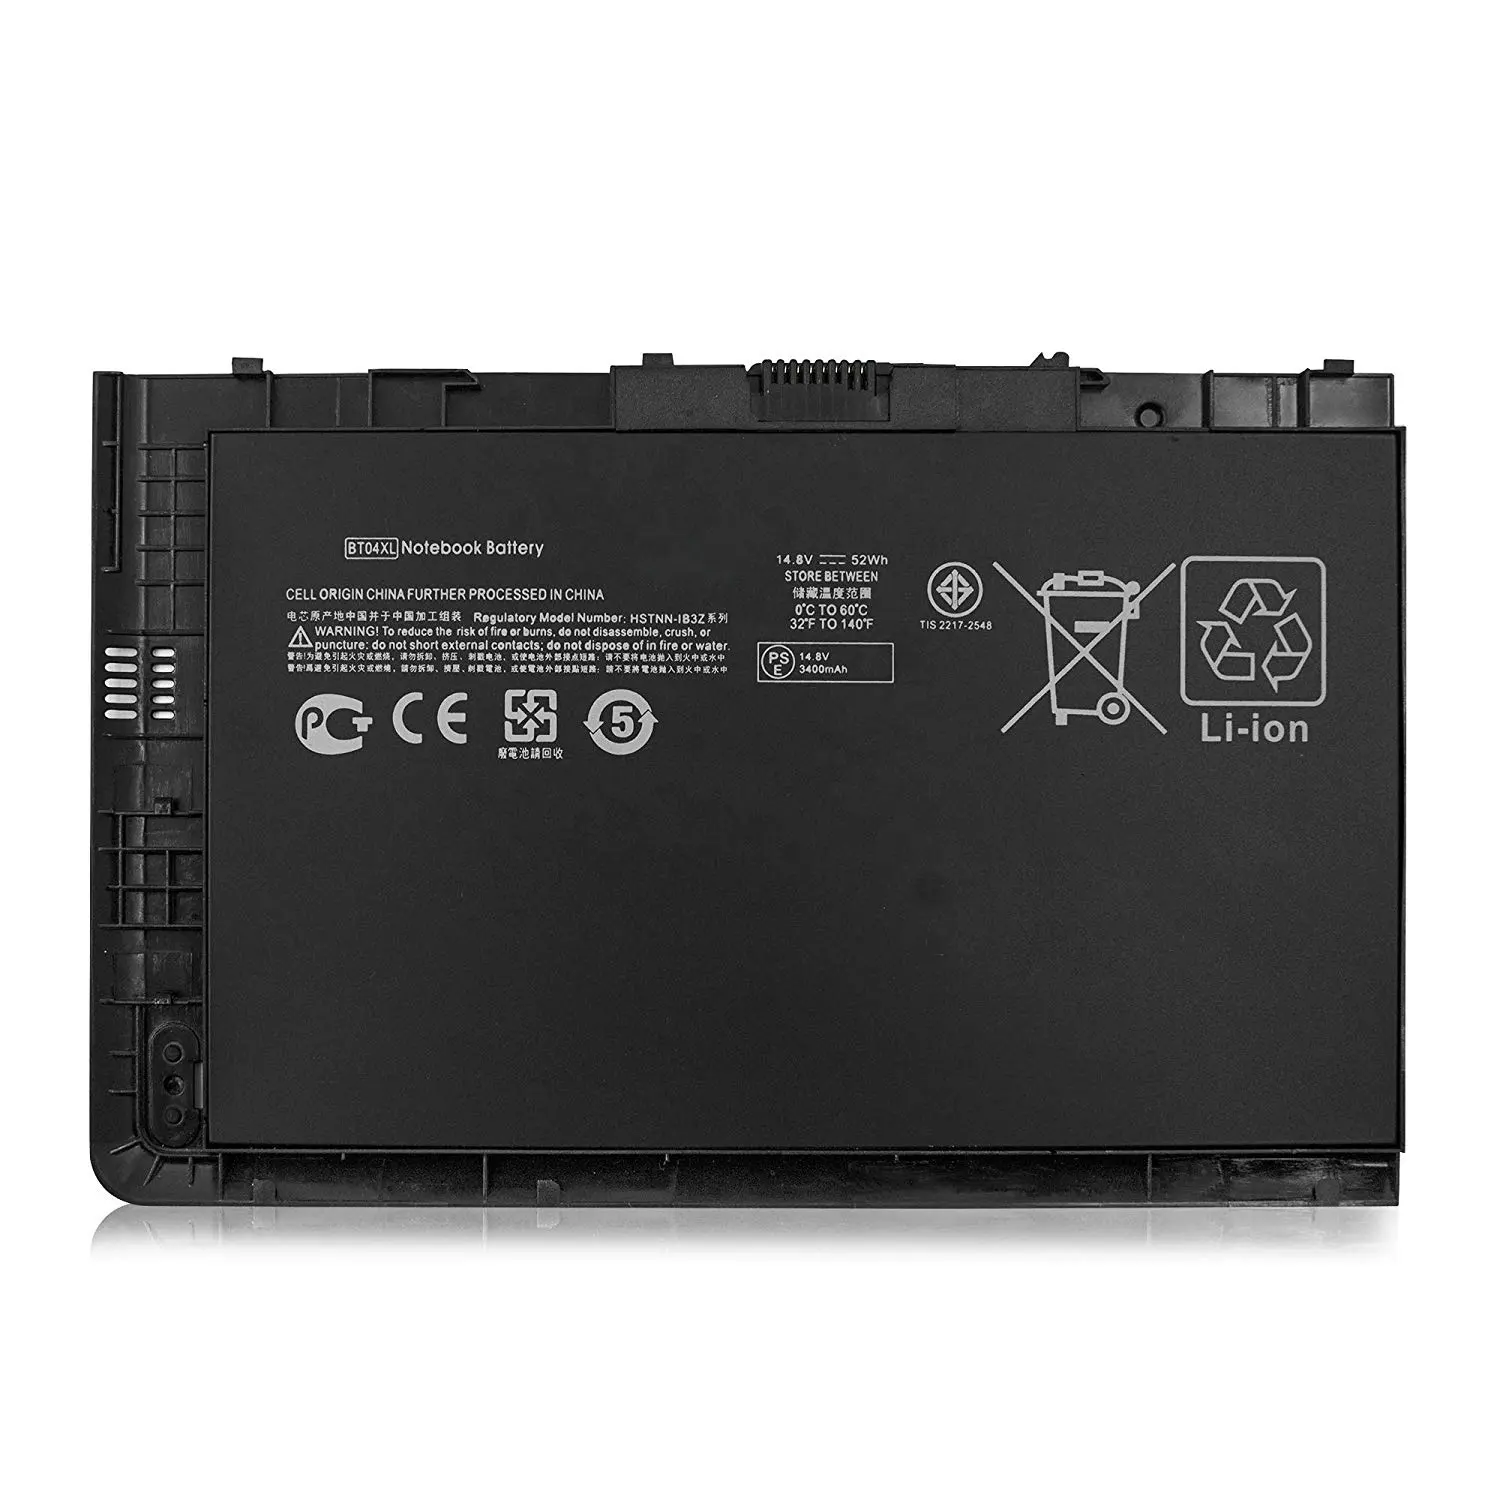 Lo-ion laptop battery BT04XL for HP HP EliteBook Folio 9470m EliteBook Folio 9480m 14.8V 3500mAh